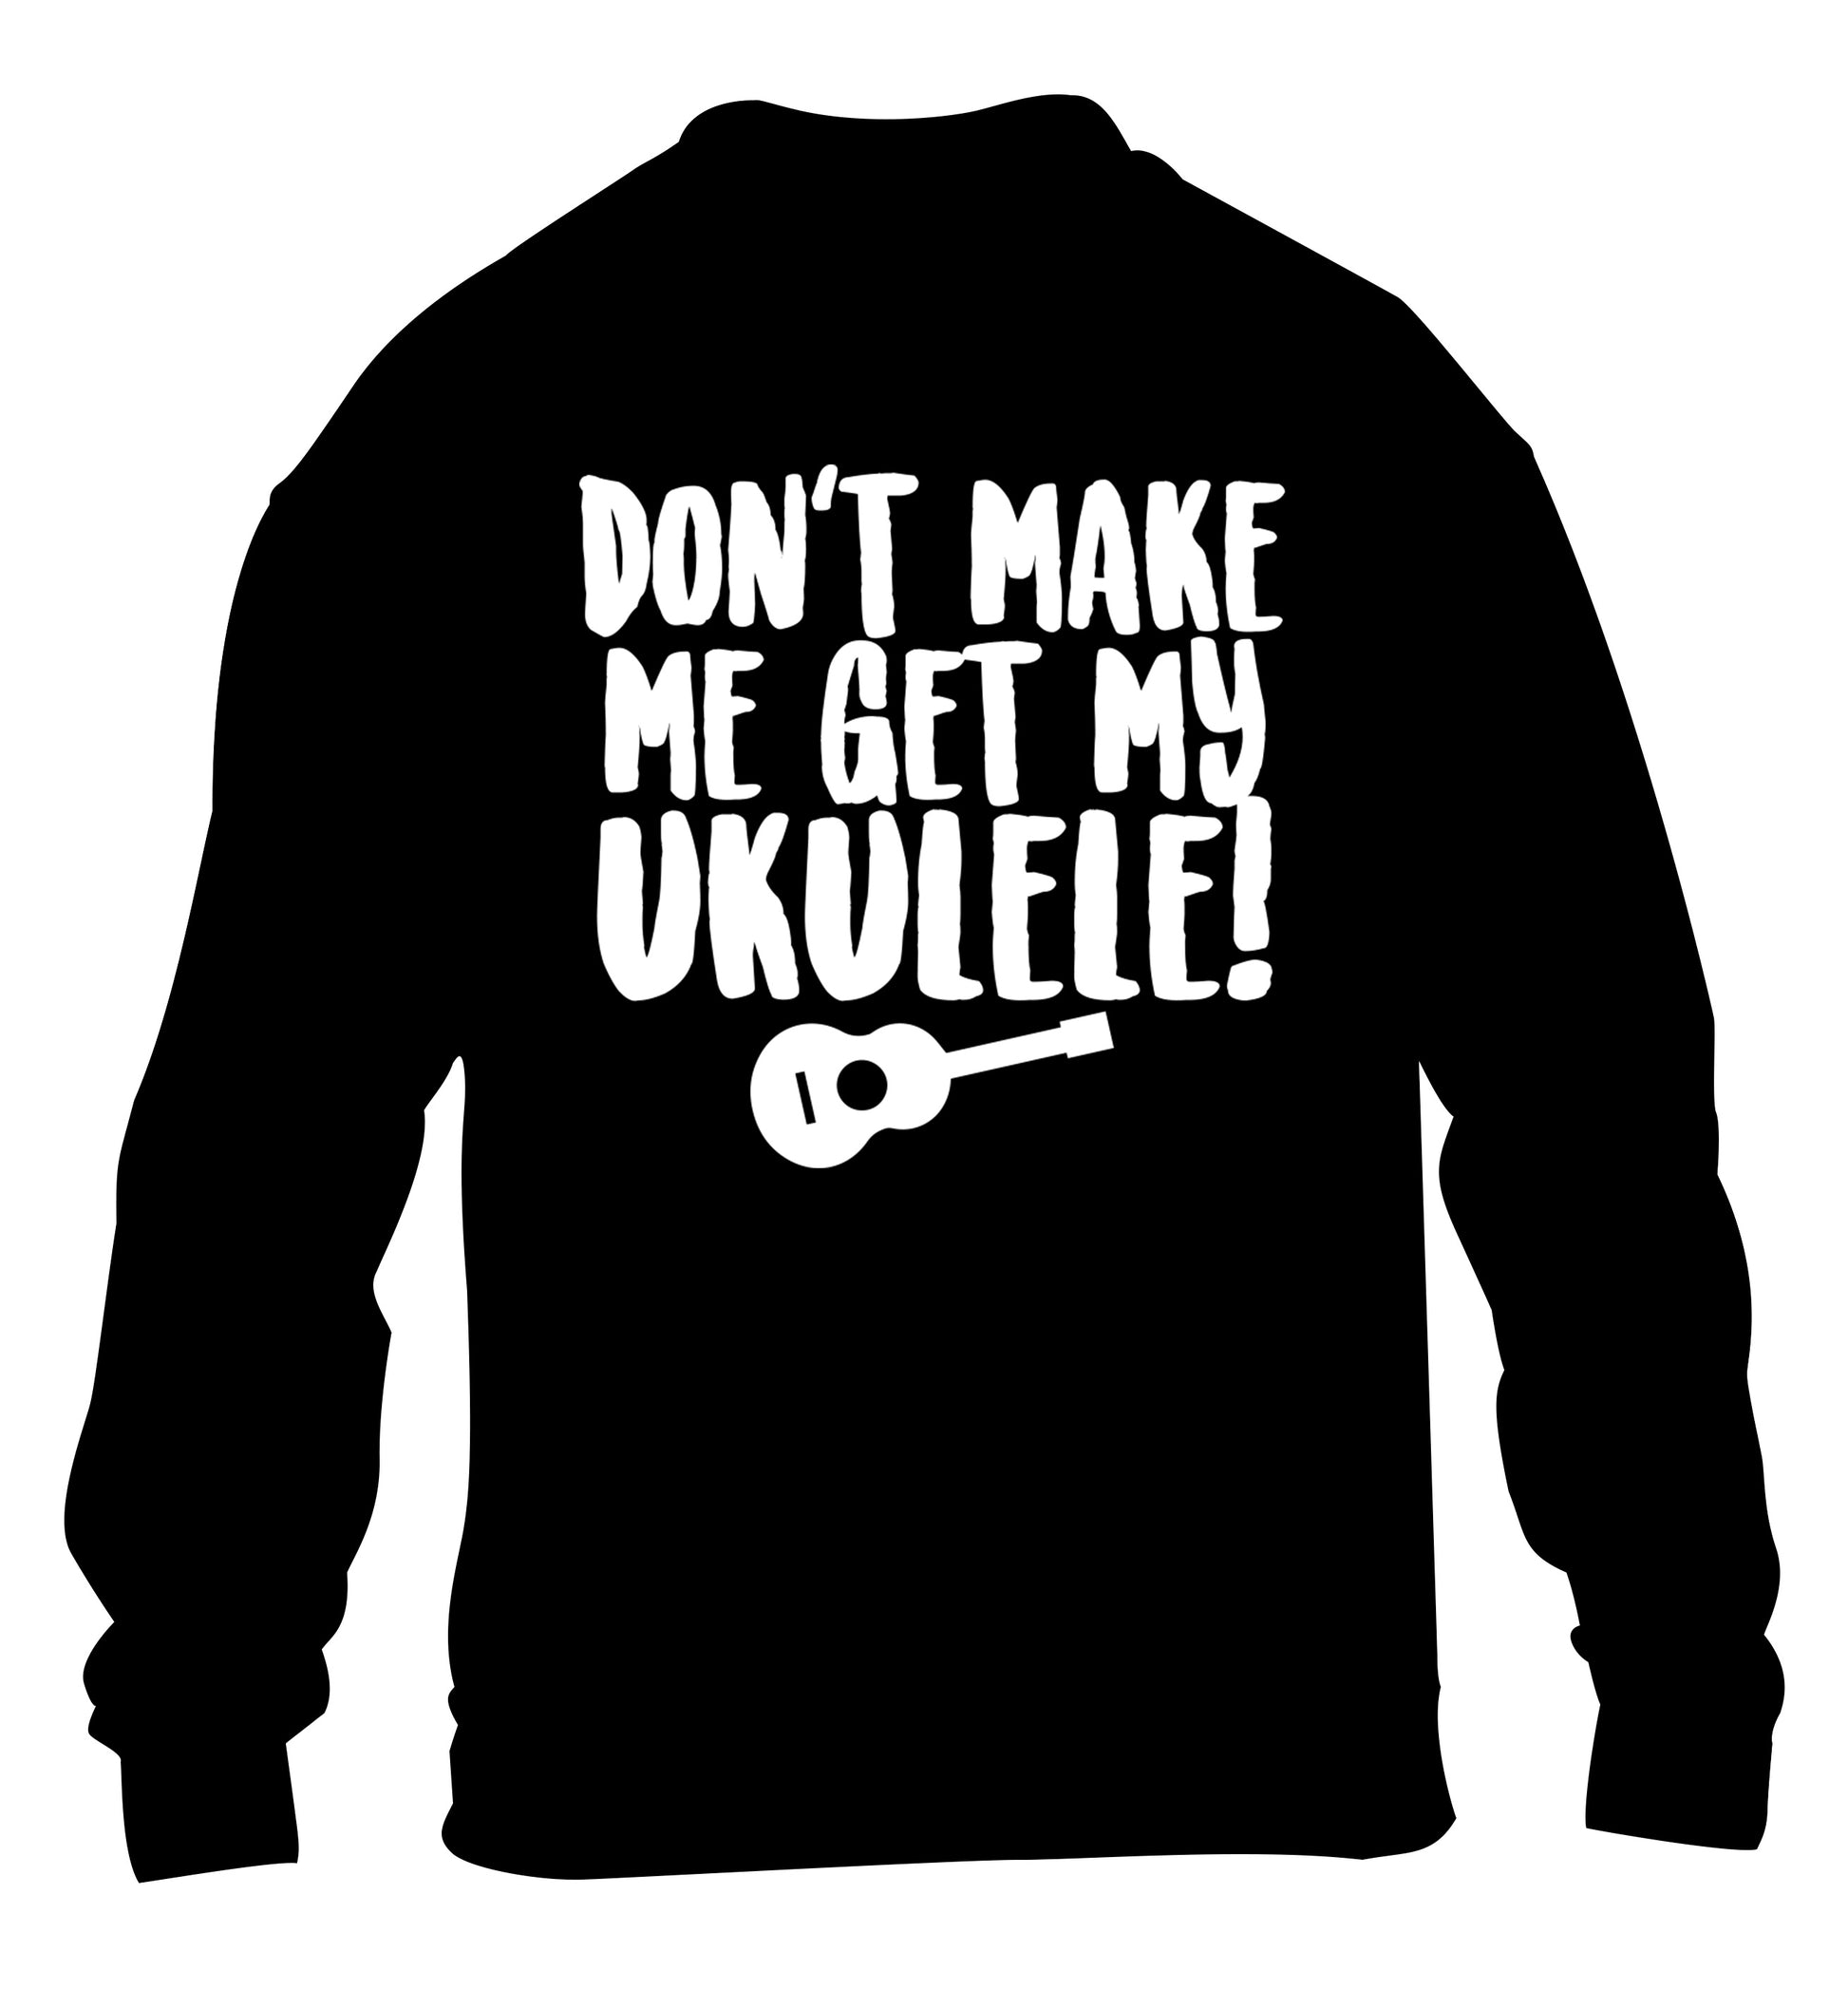 Don't make me get my ukulele children's black sweater 12-14 Years